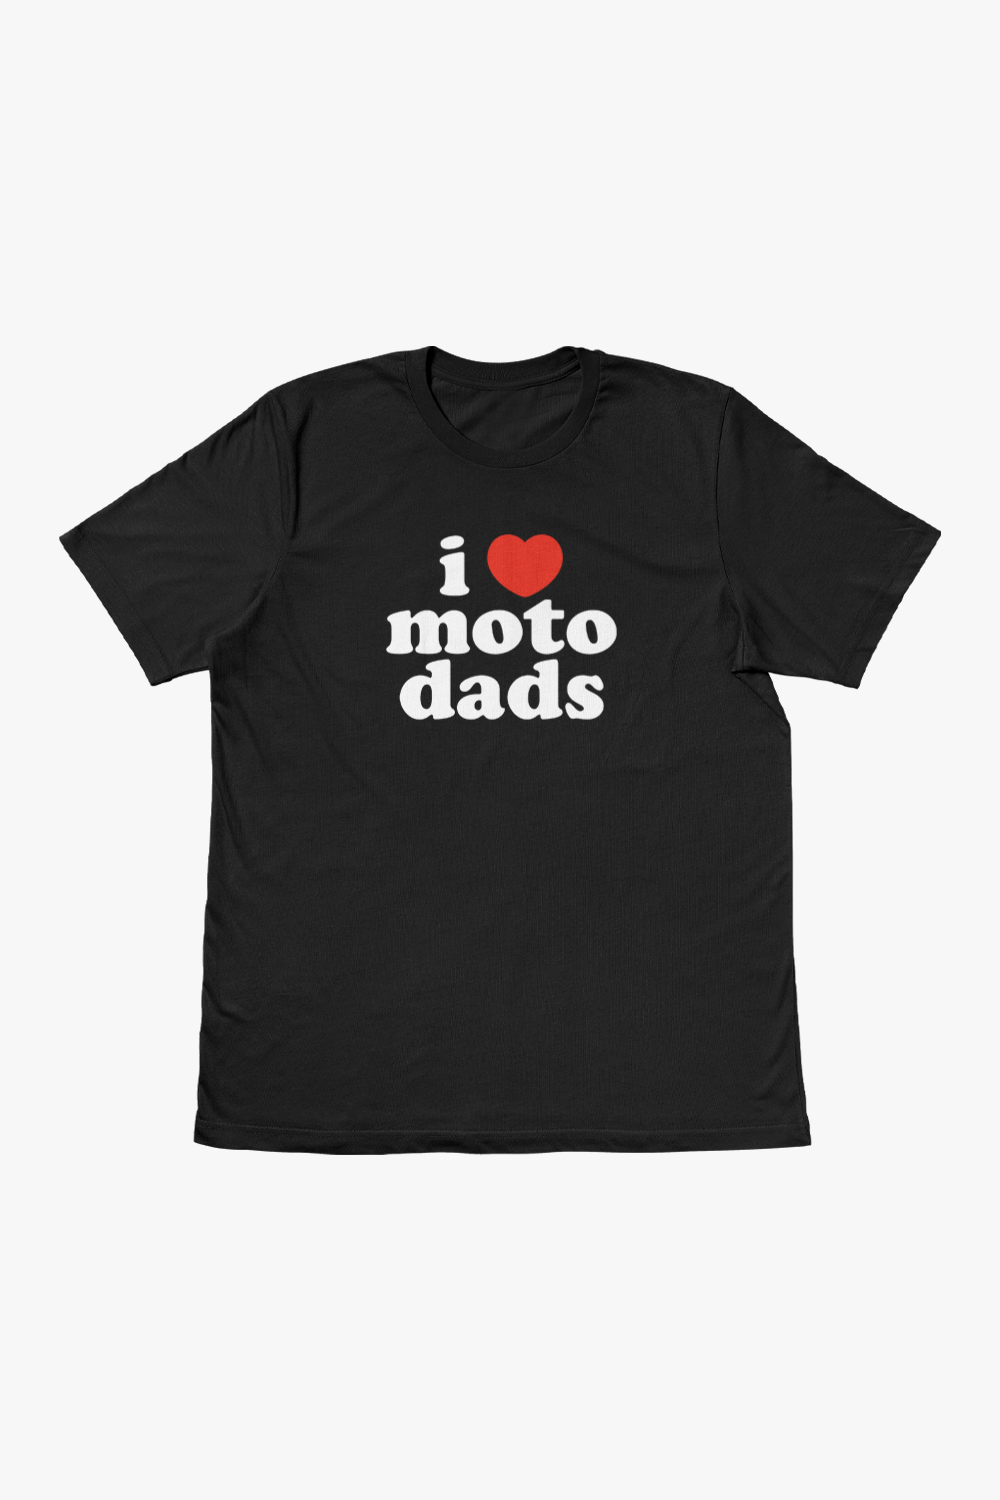 I Heart Moto Dads Tee